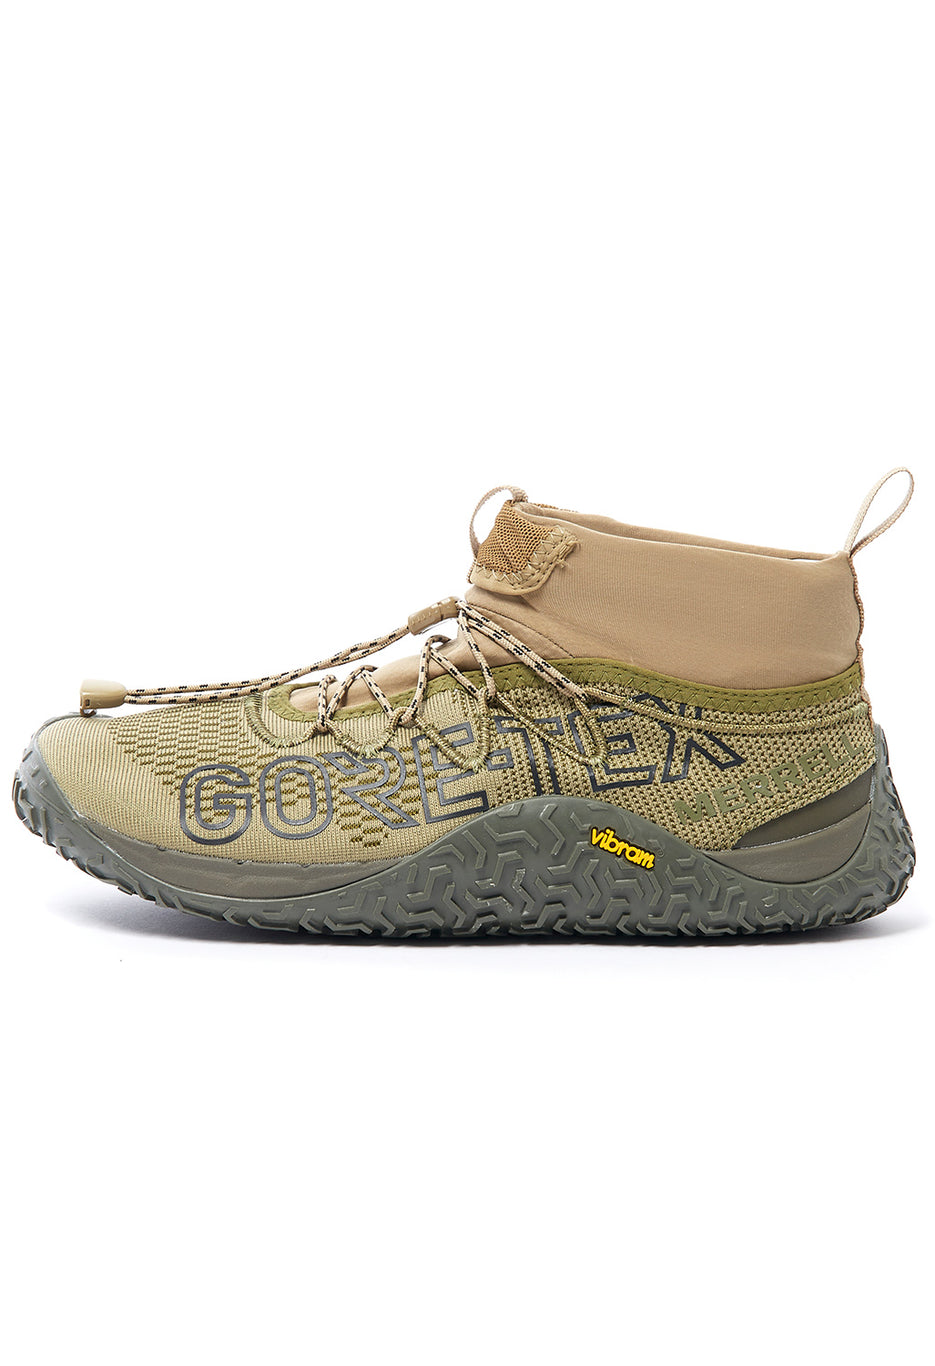 Merrell Trail Glove 7 GTX Shoes - Herb/Coyote